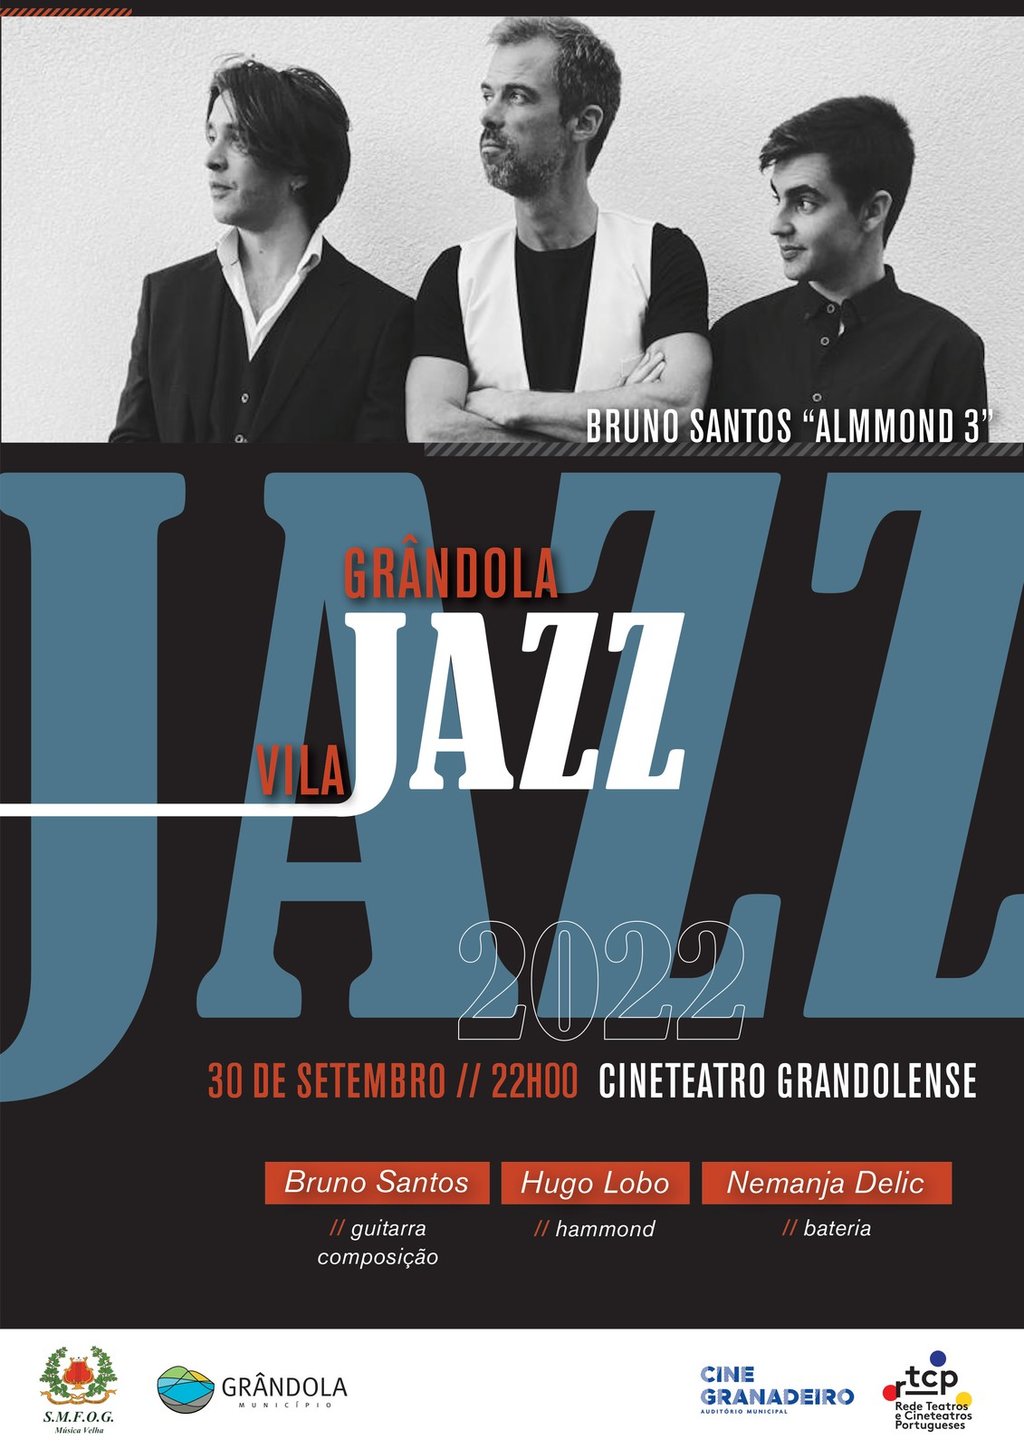 Grândola, Vila Jazz | | Bruno Santos “Almmond 3”